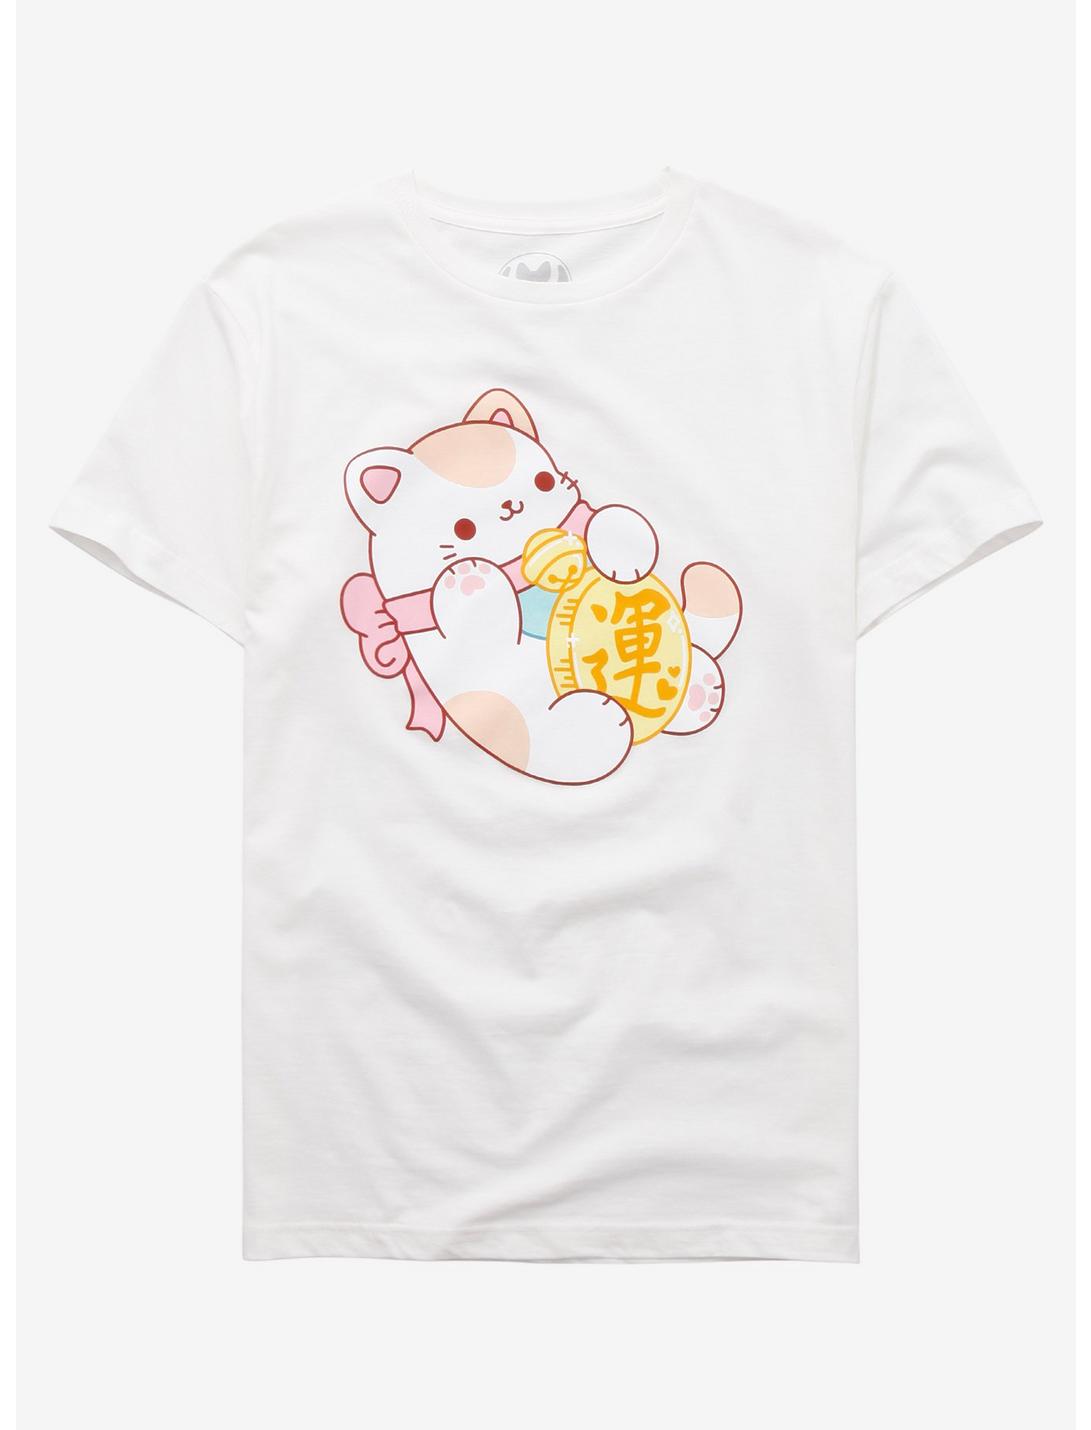 Lucky Cat Boyfriend Fit Girls T-Shirt By Bright Bat Design, MULTI, hi-res